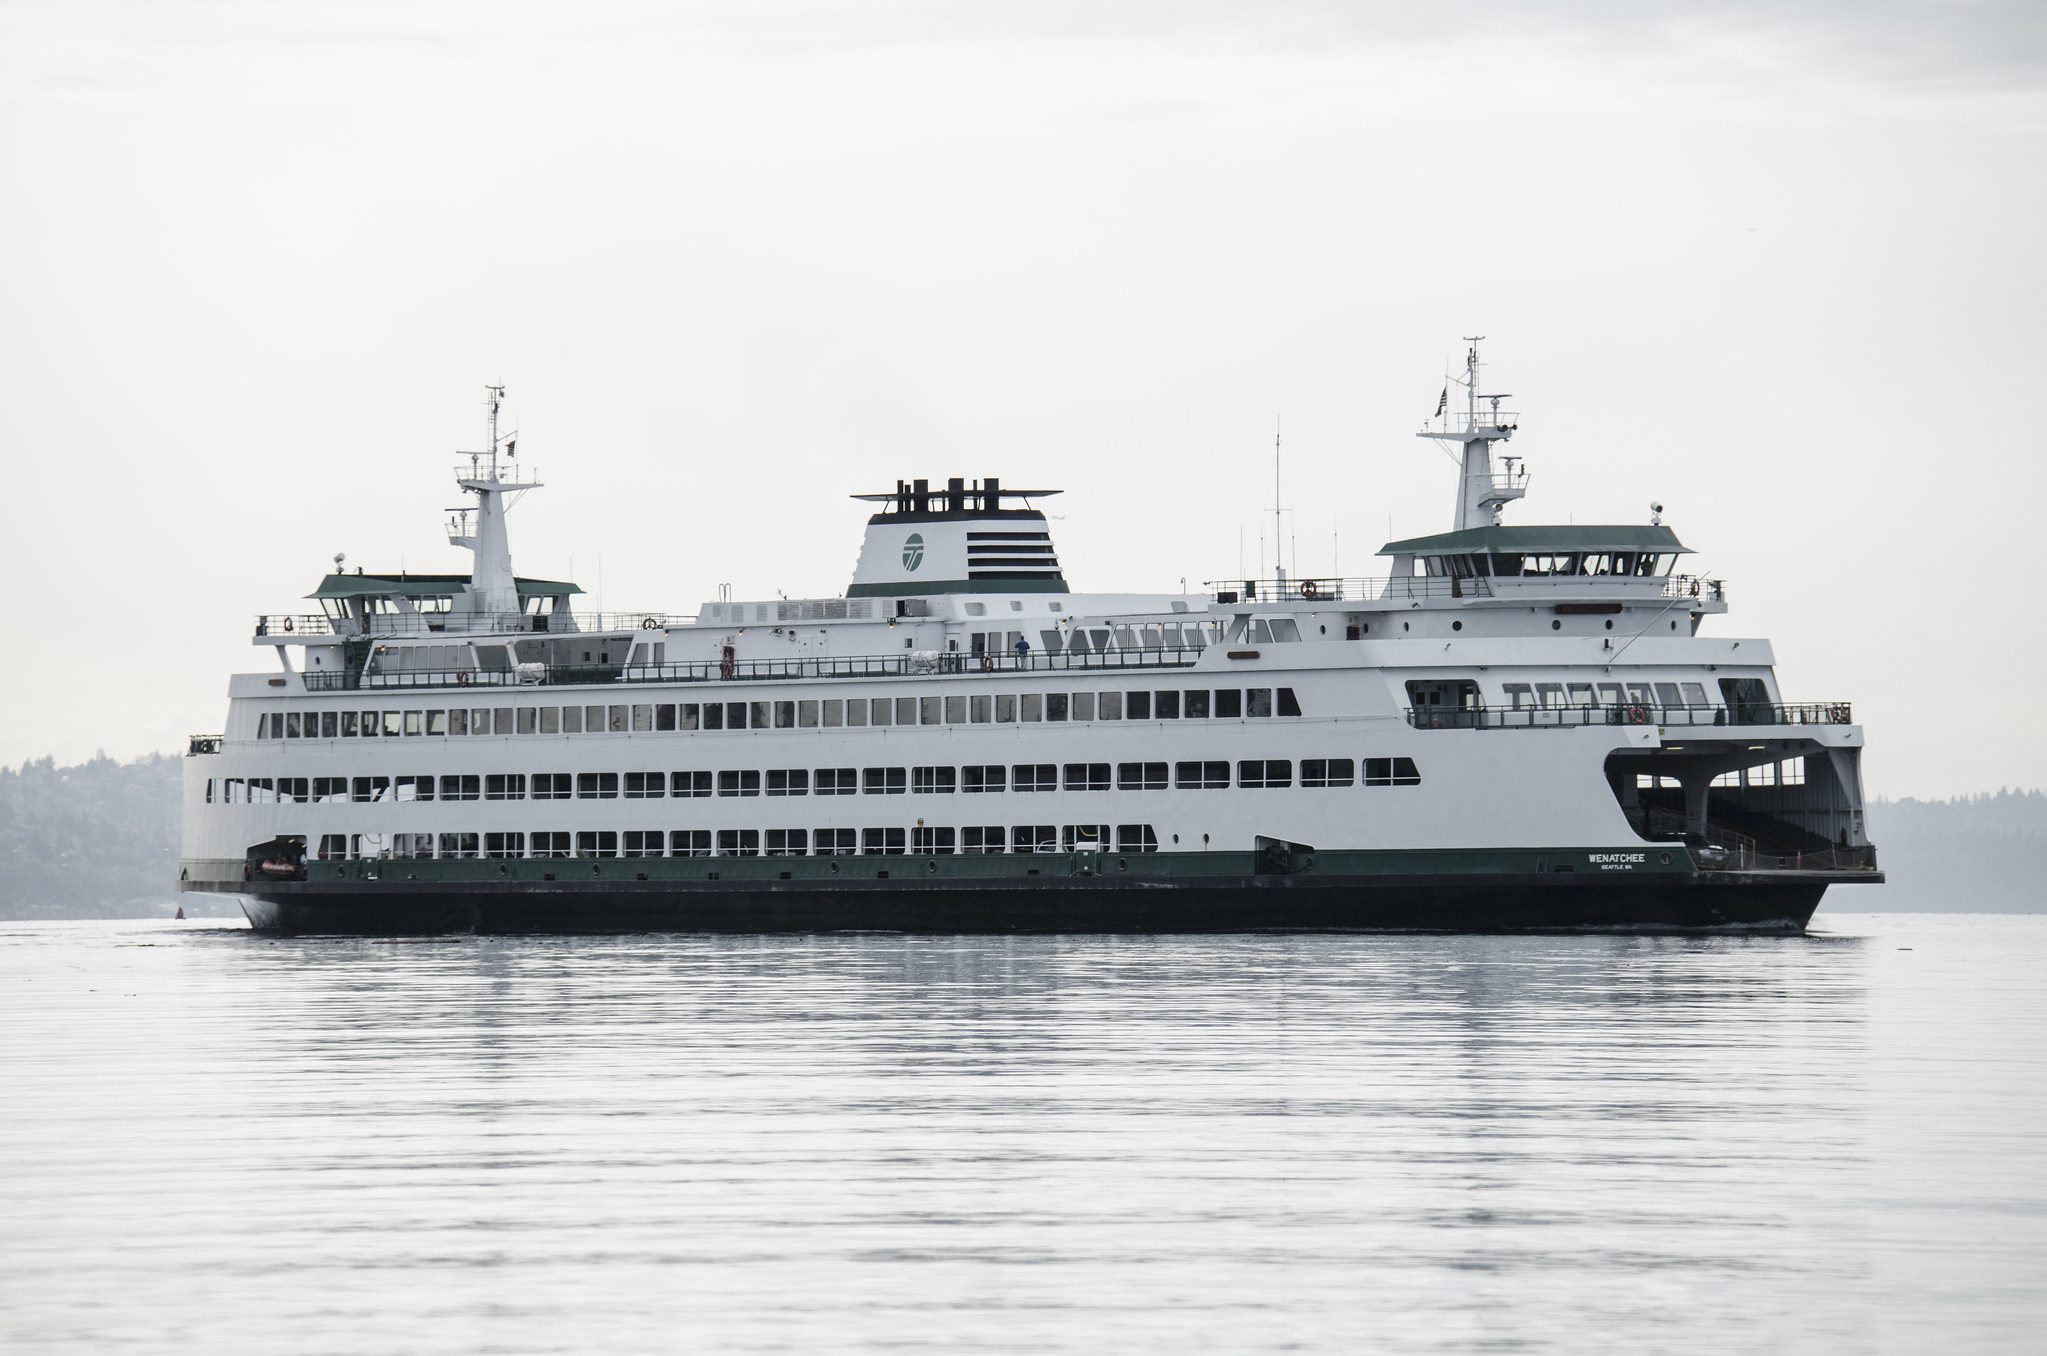 Maintenance Error Led to Costly Marine Casualty on Washington State Ferry -NTSB